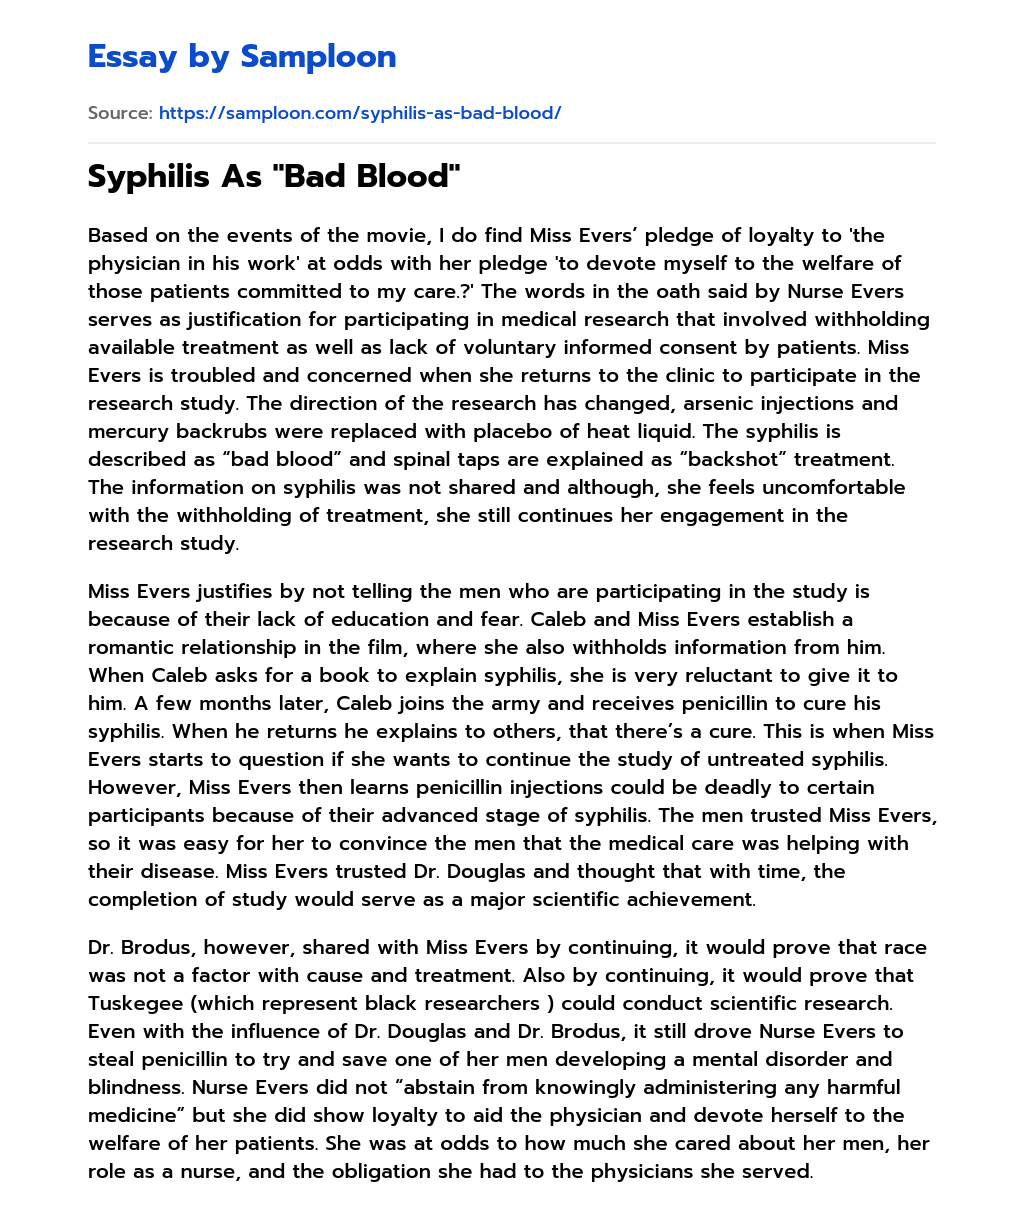 Syphilis As “Bad Blood” essay